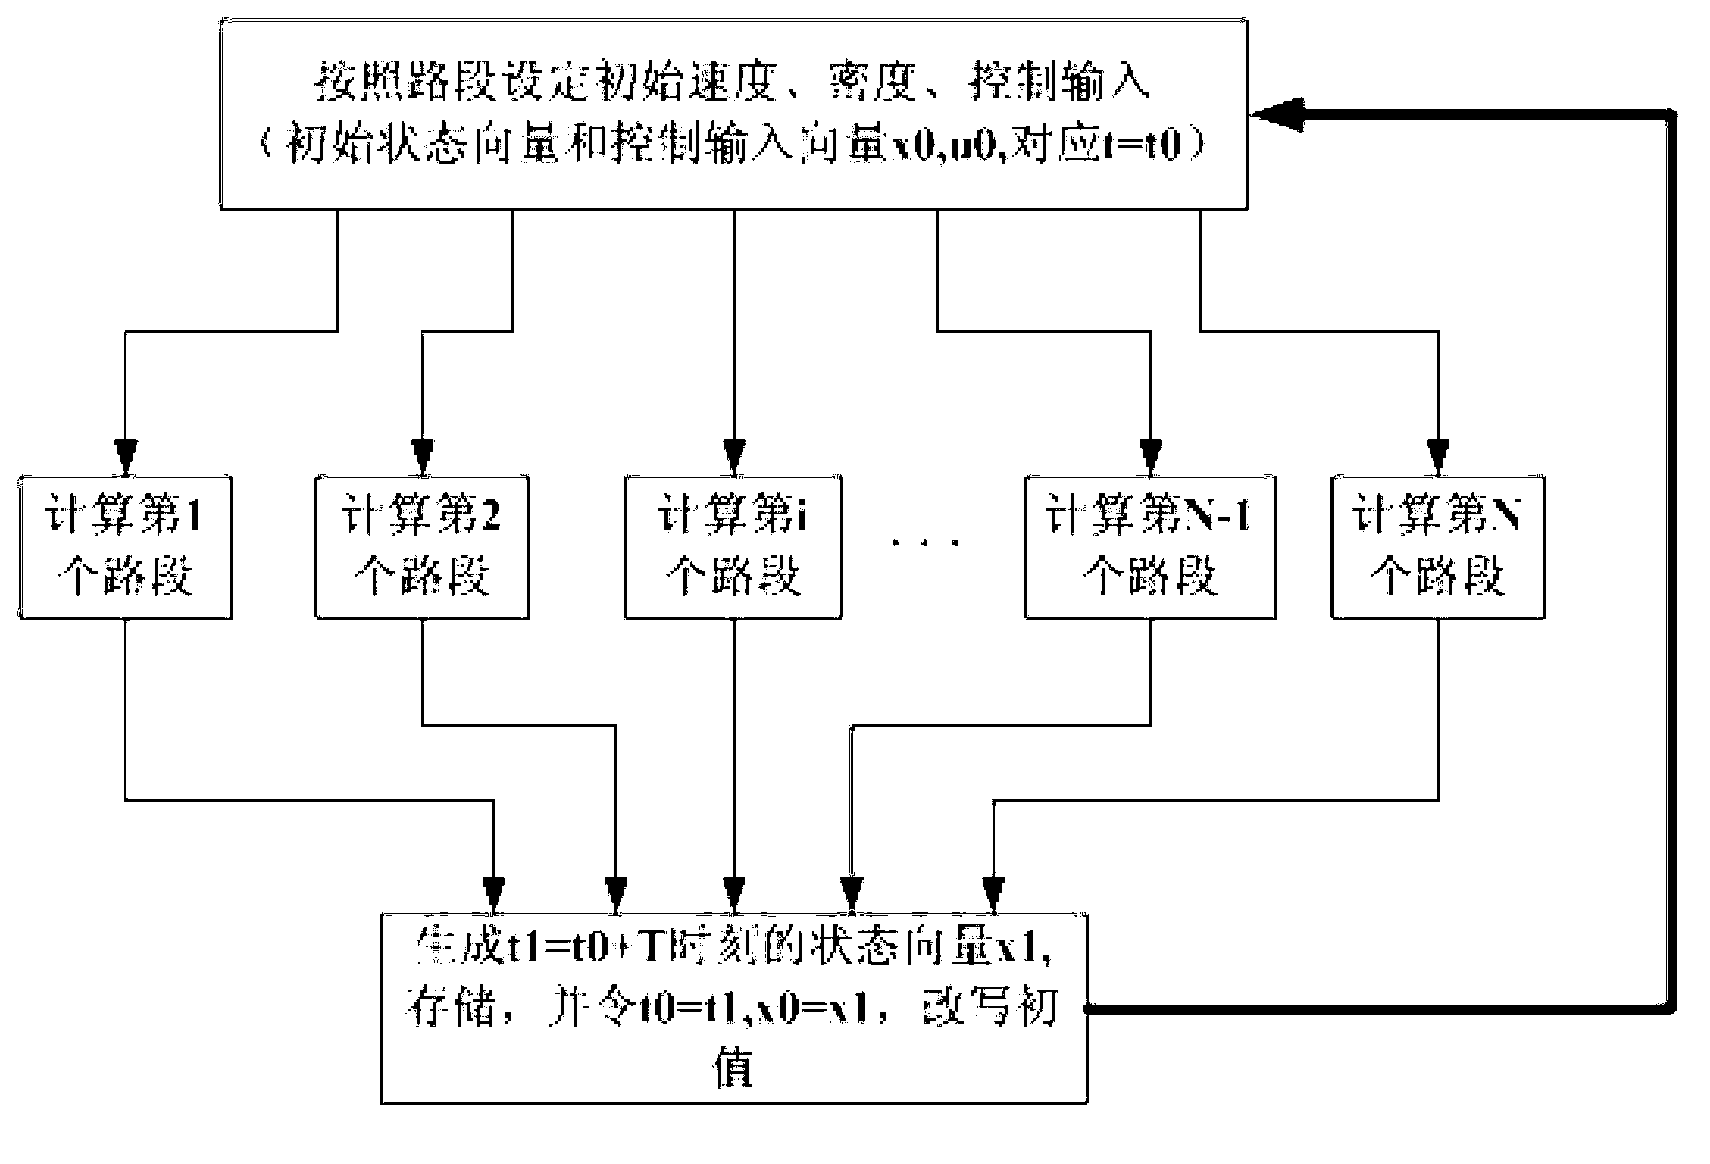 FPGA (Field Programmable Gate Array) online prediction control method based on Xue-Dai macroscopic traffic flow model